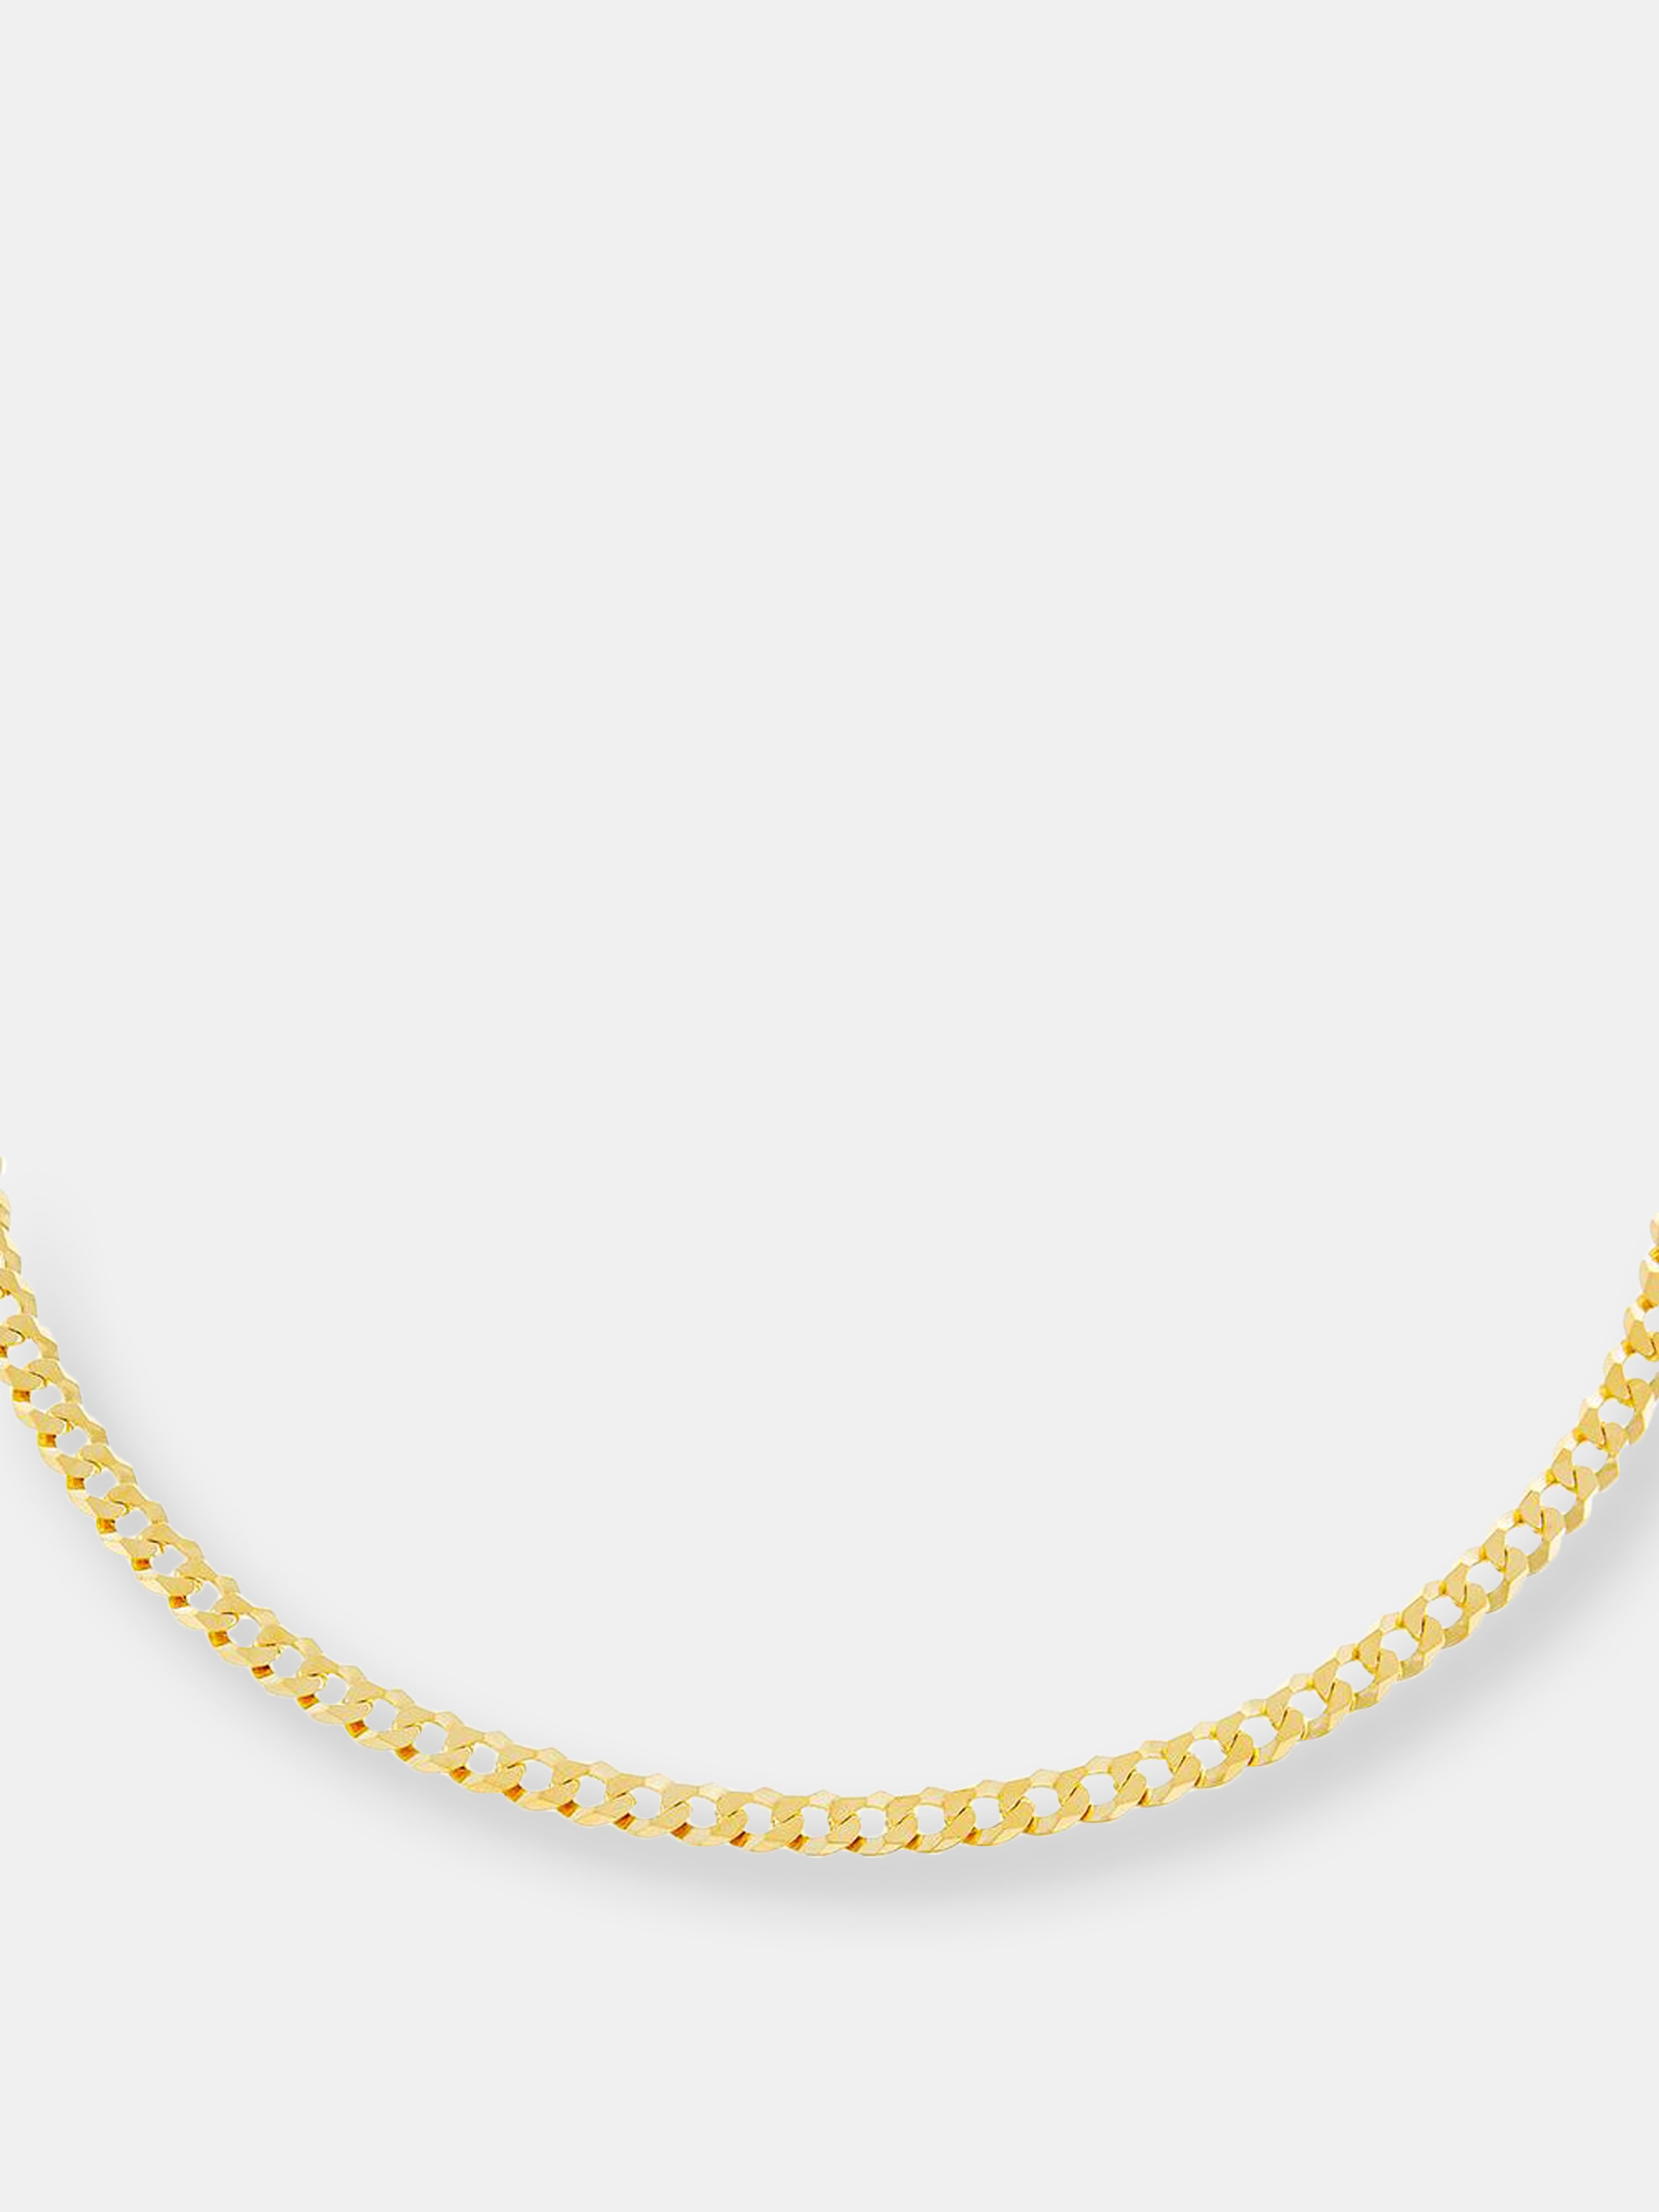 Adinas Jewels Adina's Jewels Extra Flat Cuban Chain Necklace In Gold